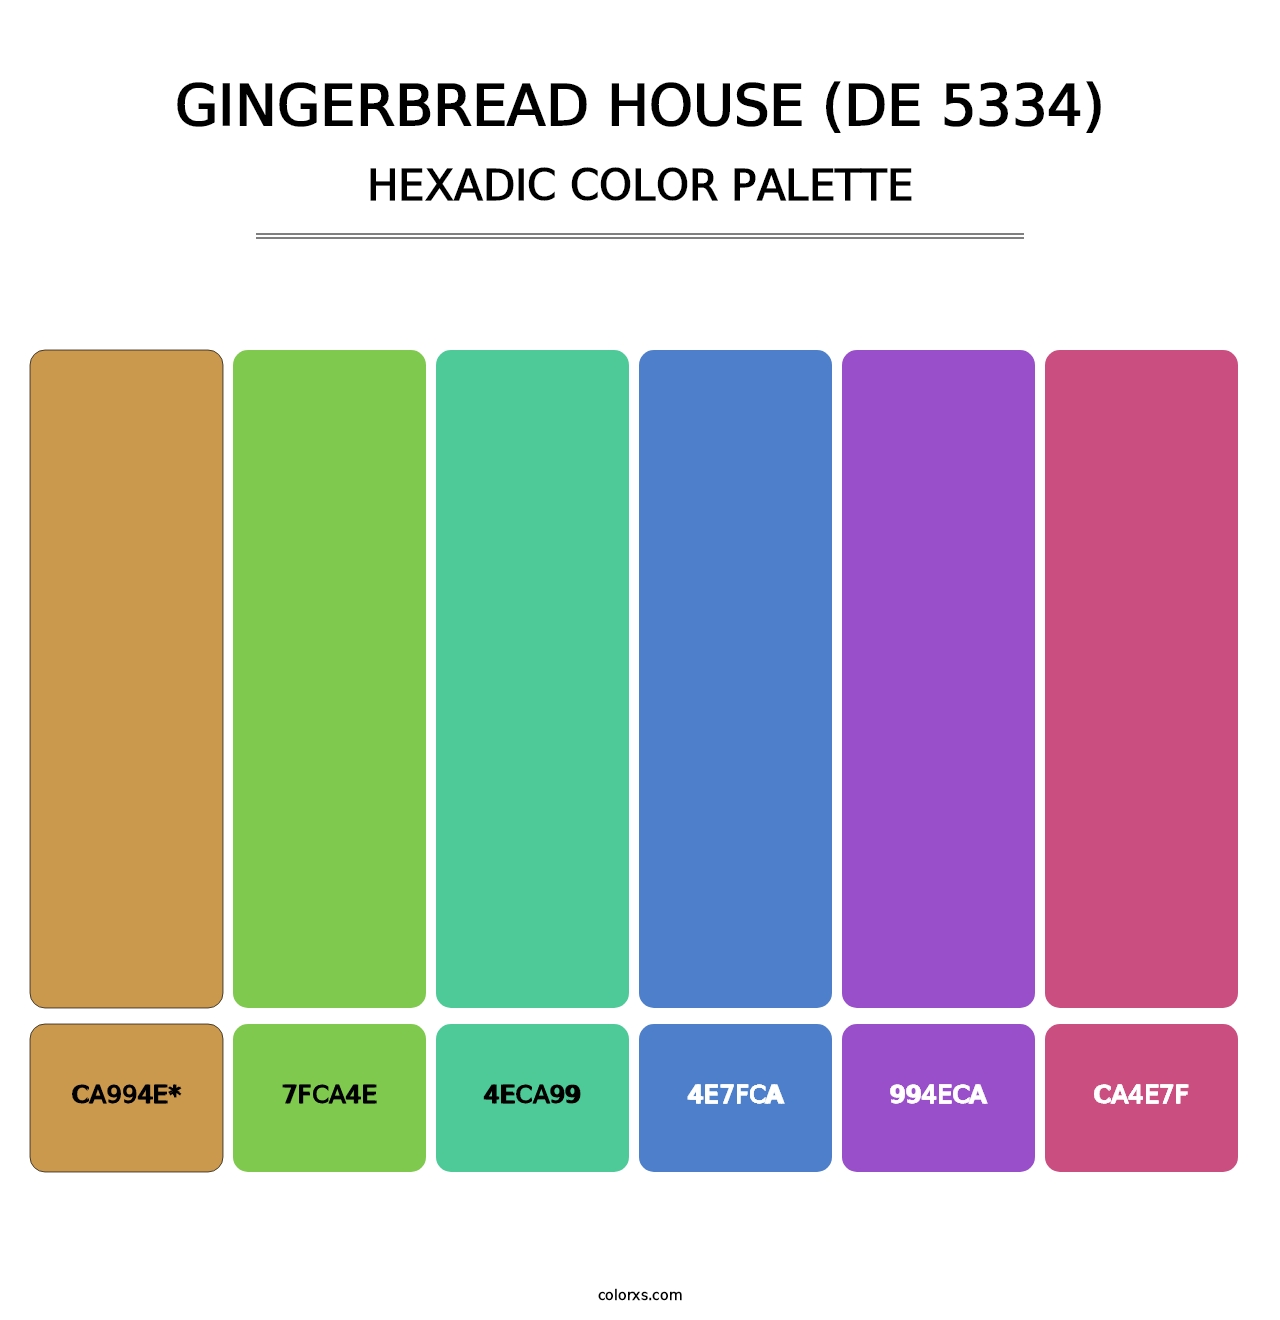 Gingerbread House (DE 5334) - Hexadic Color Palette